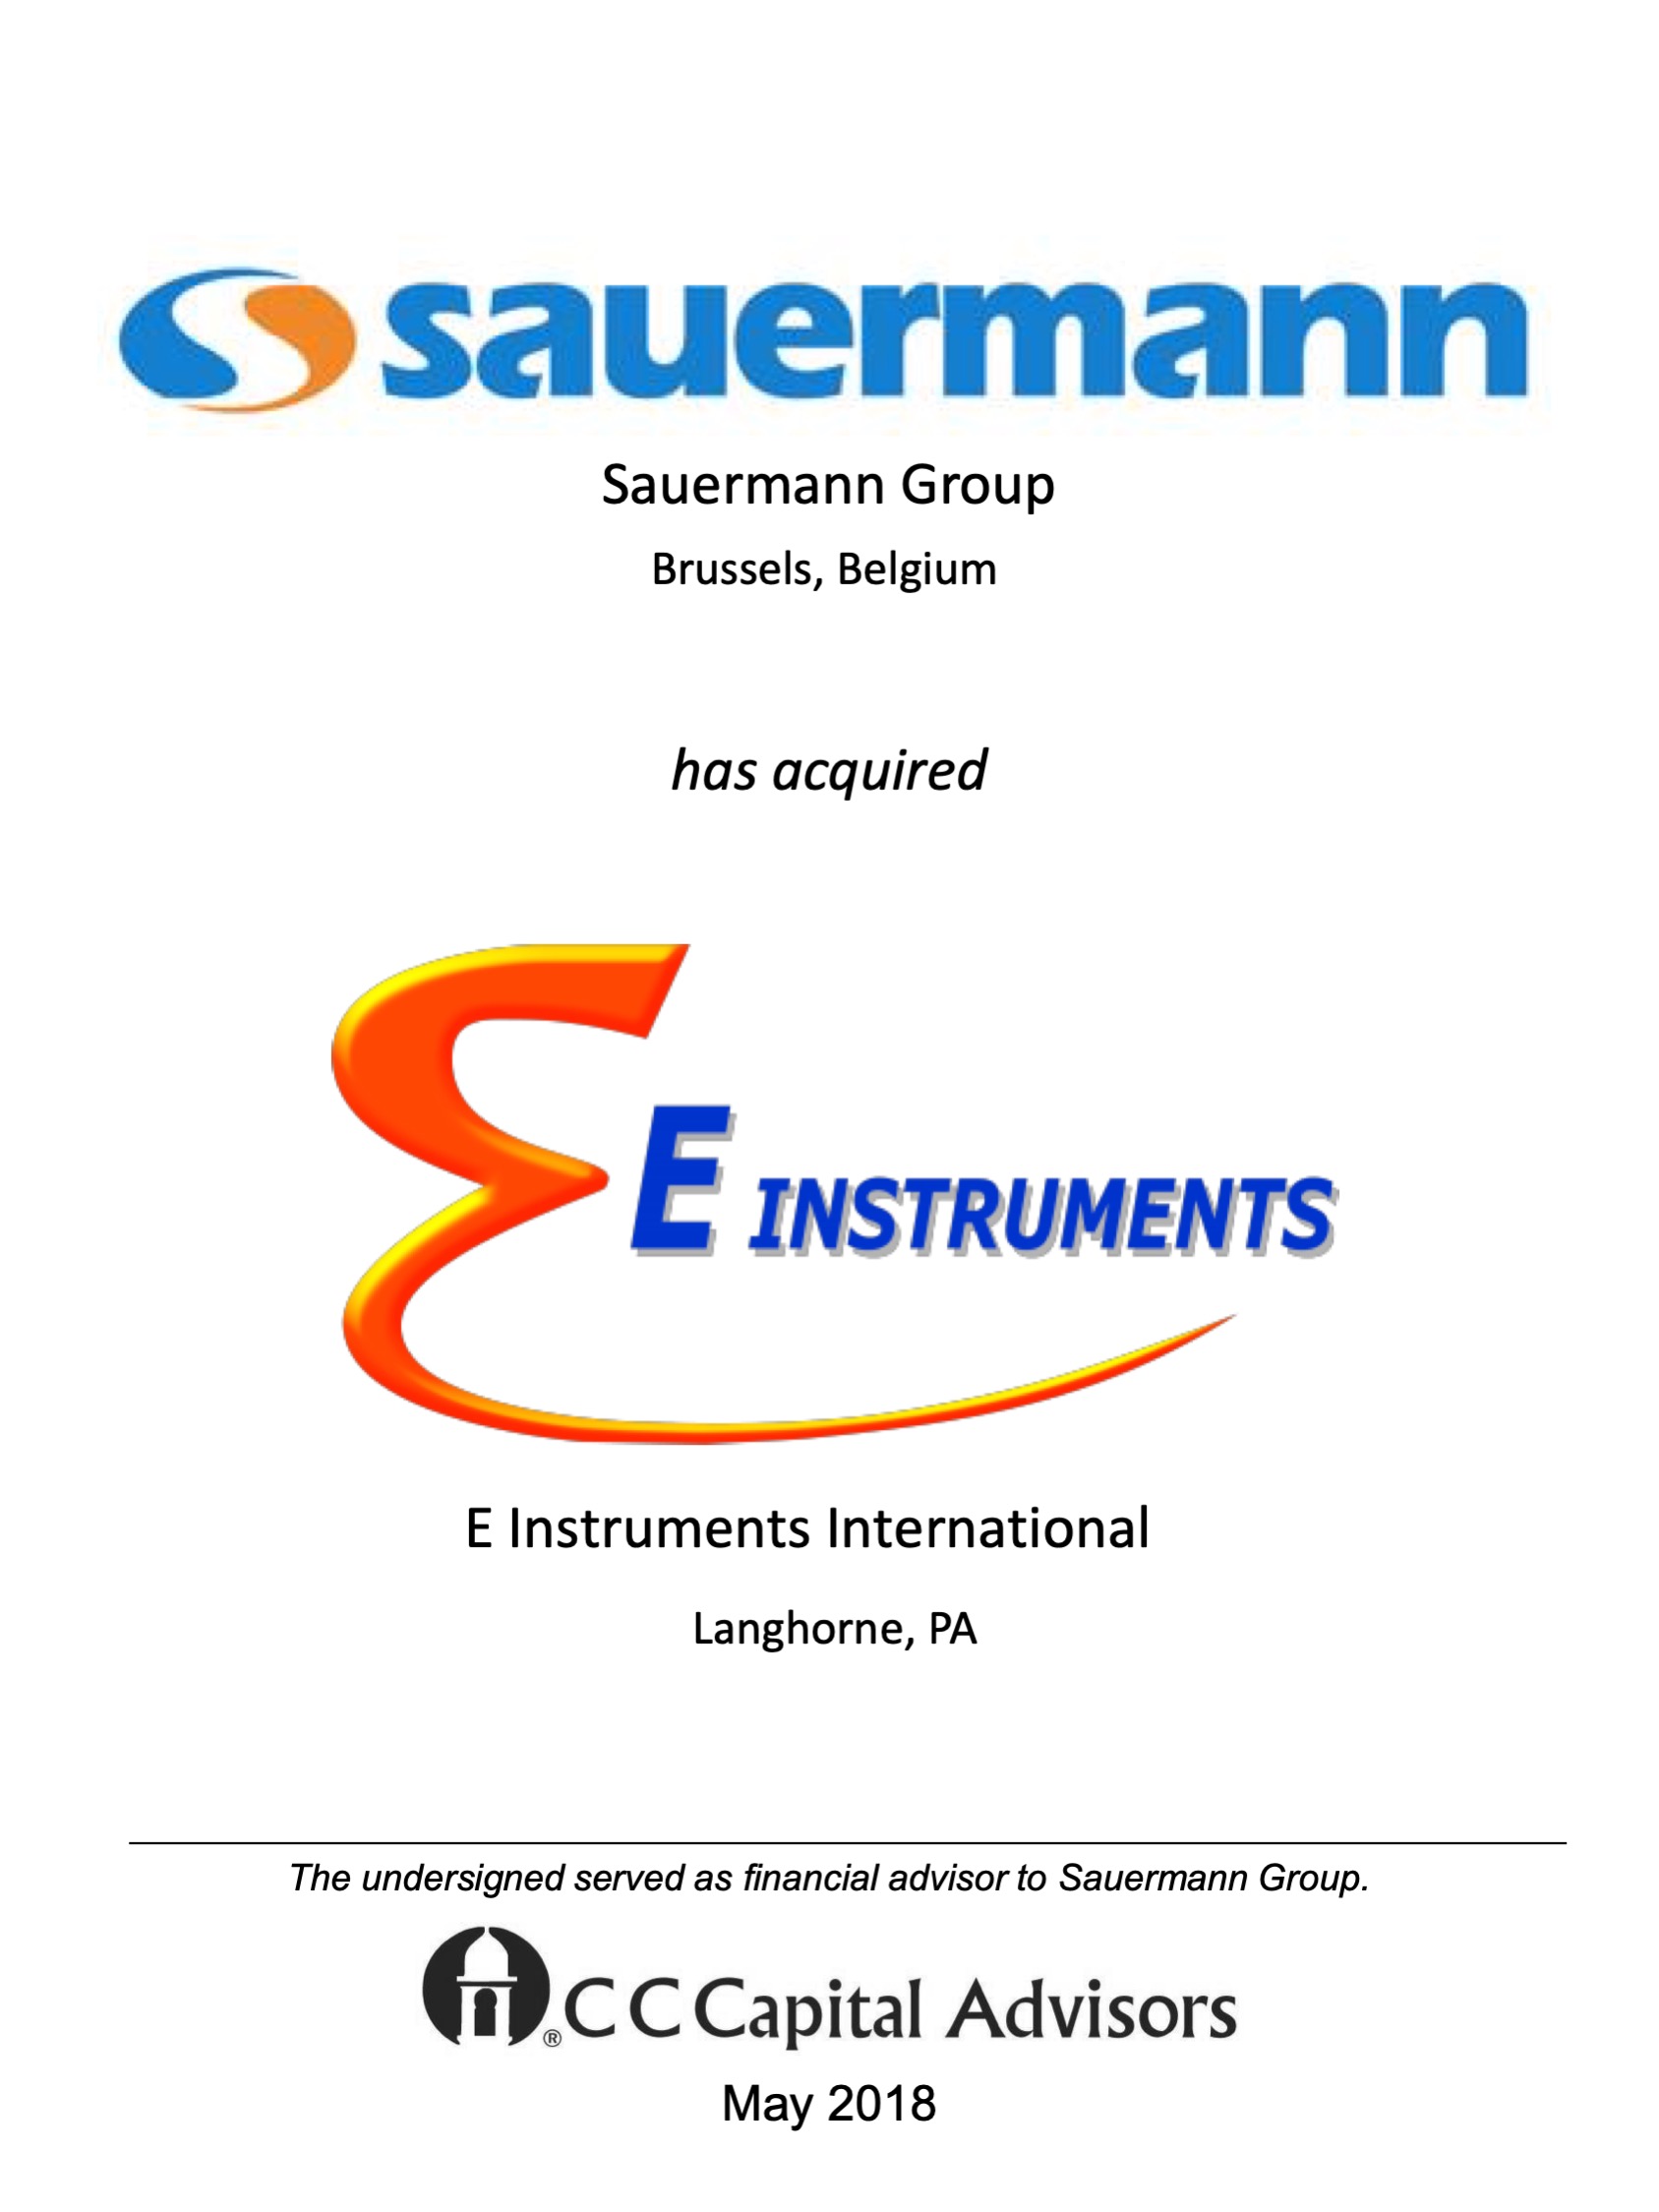 Sauermann transaction